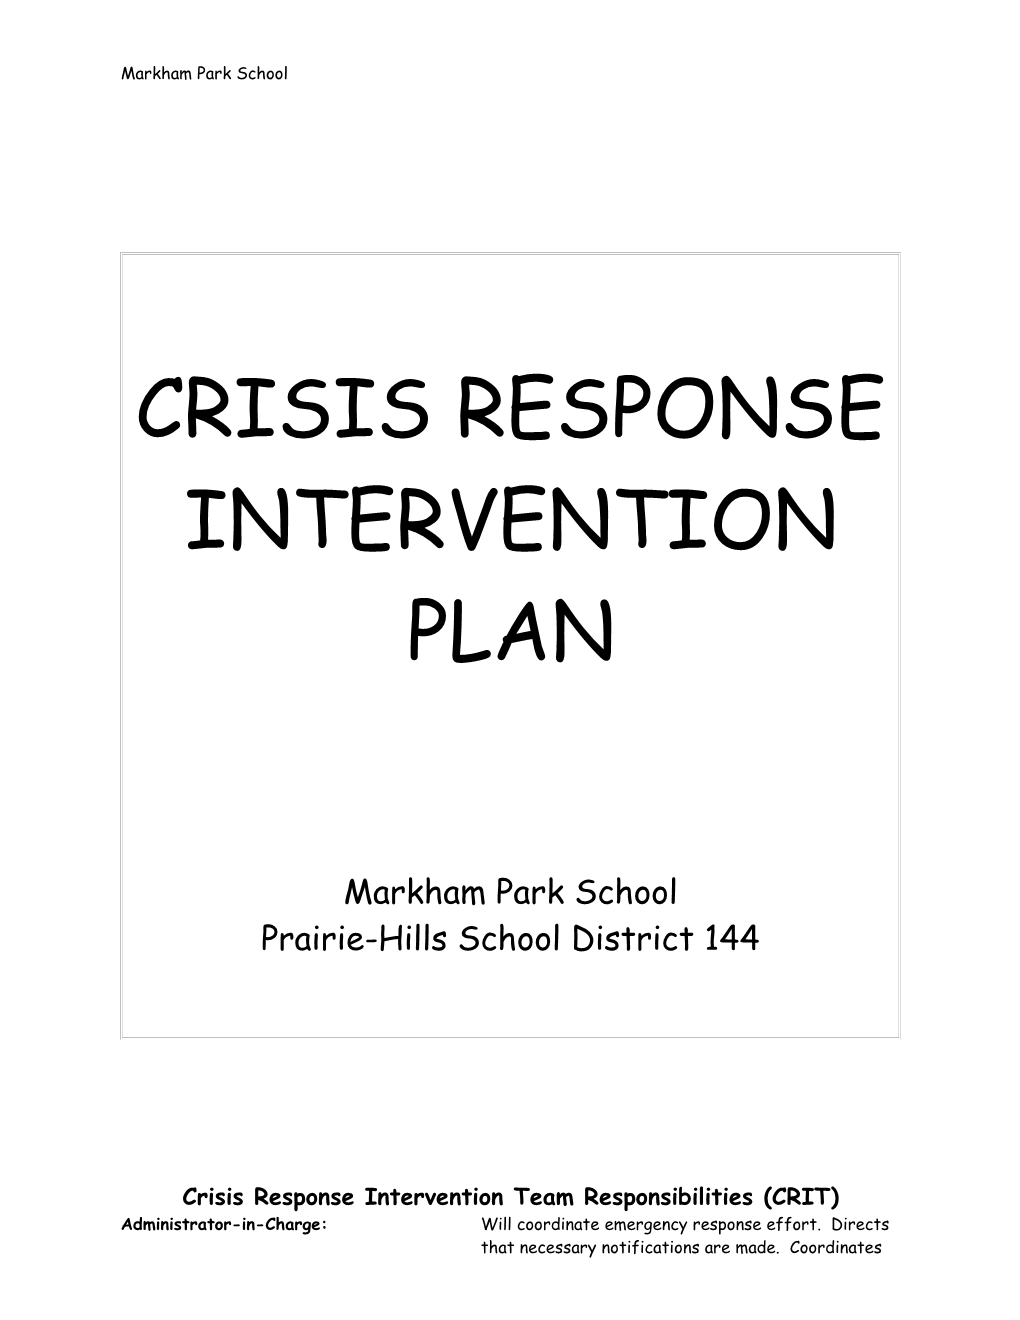 Crisis Response Intervention Team Responsibilities (CRIT)